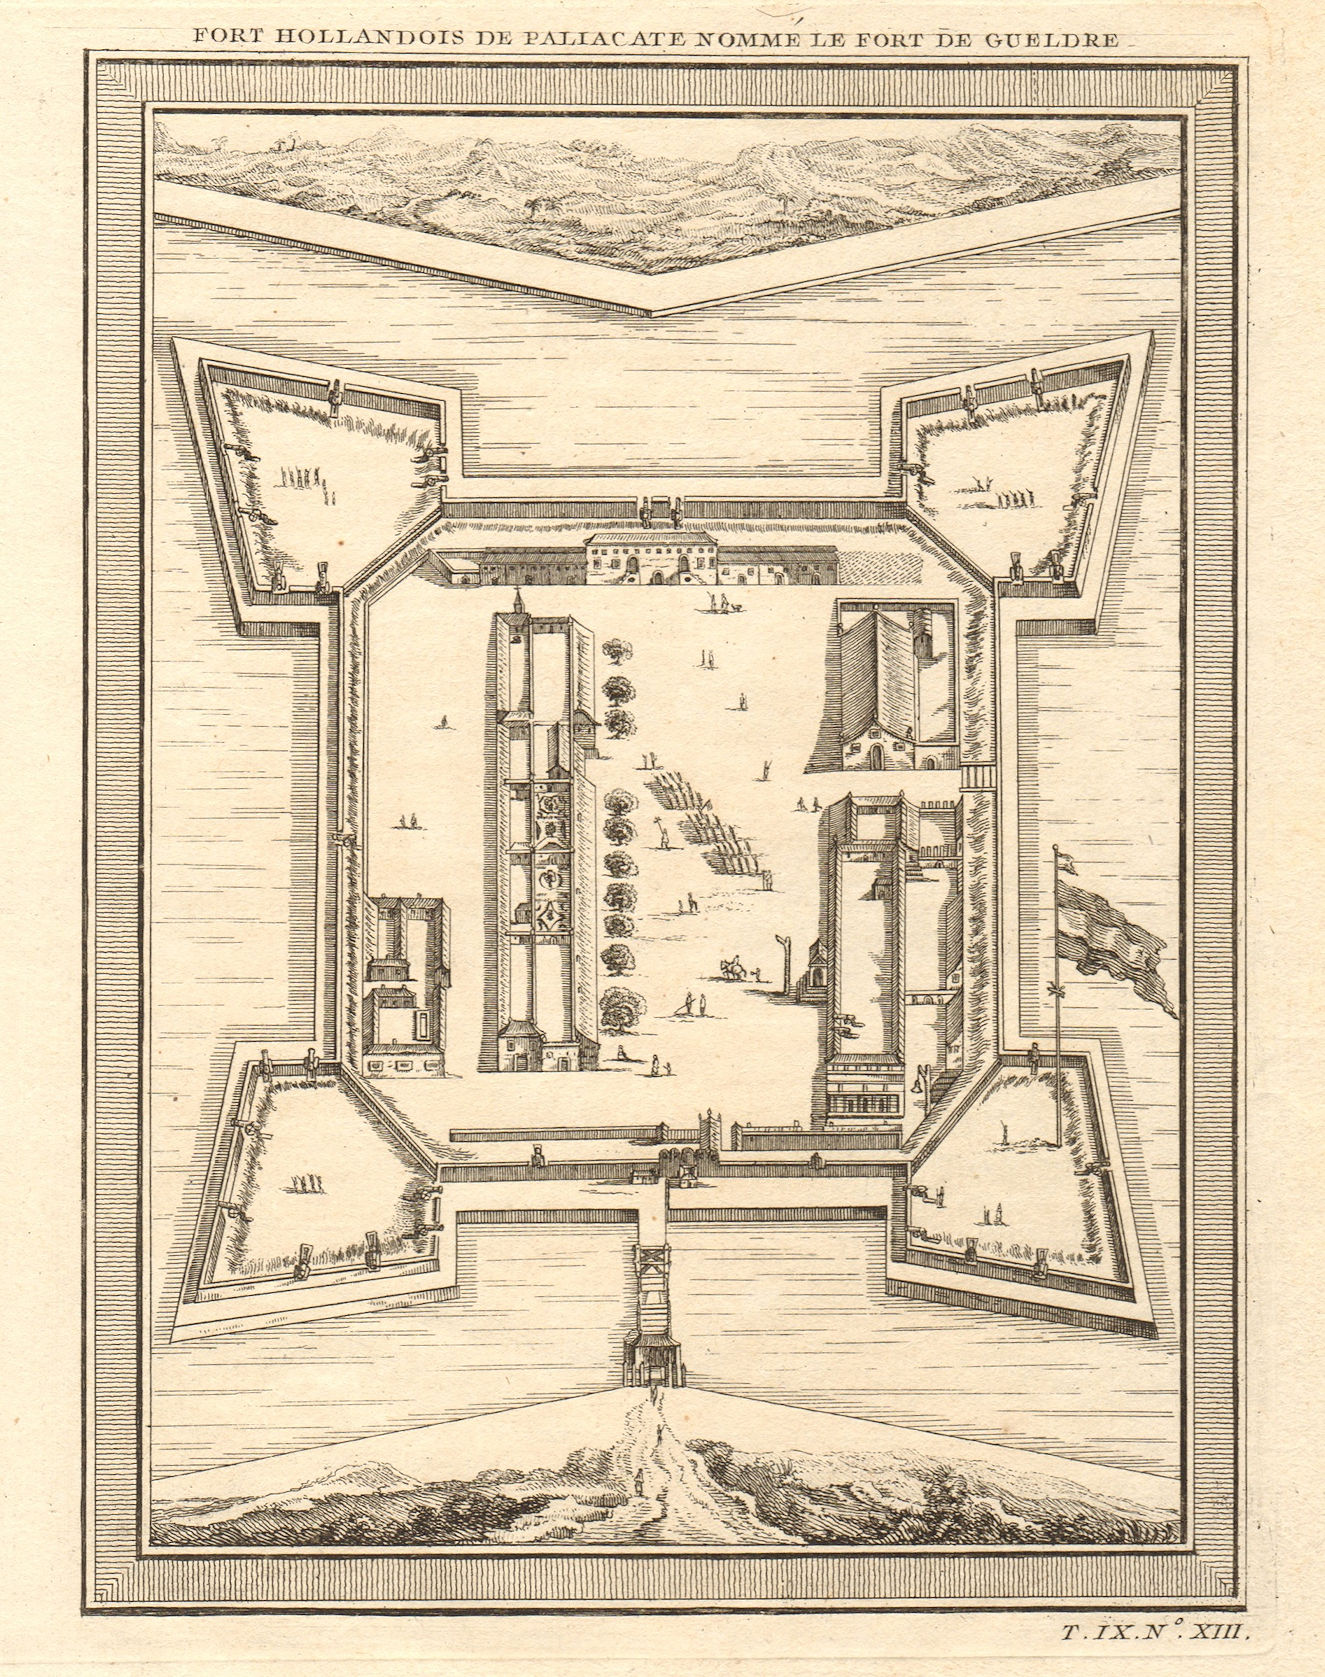 Associate Product 'Fort Hollandois de Paliacate… Gueldre'. Fort Geldria, Pulicat. BELLIN 1751 map